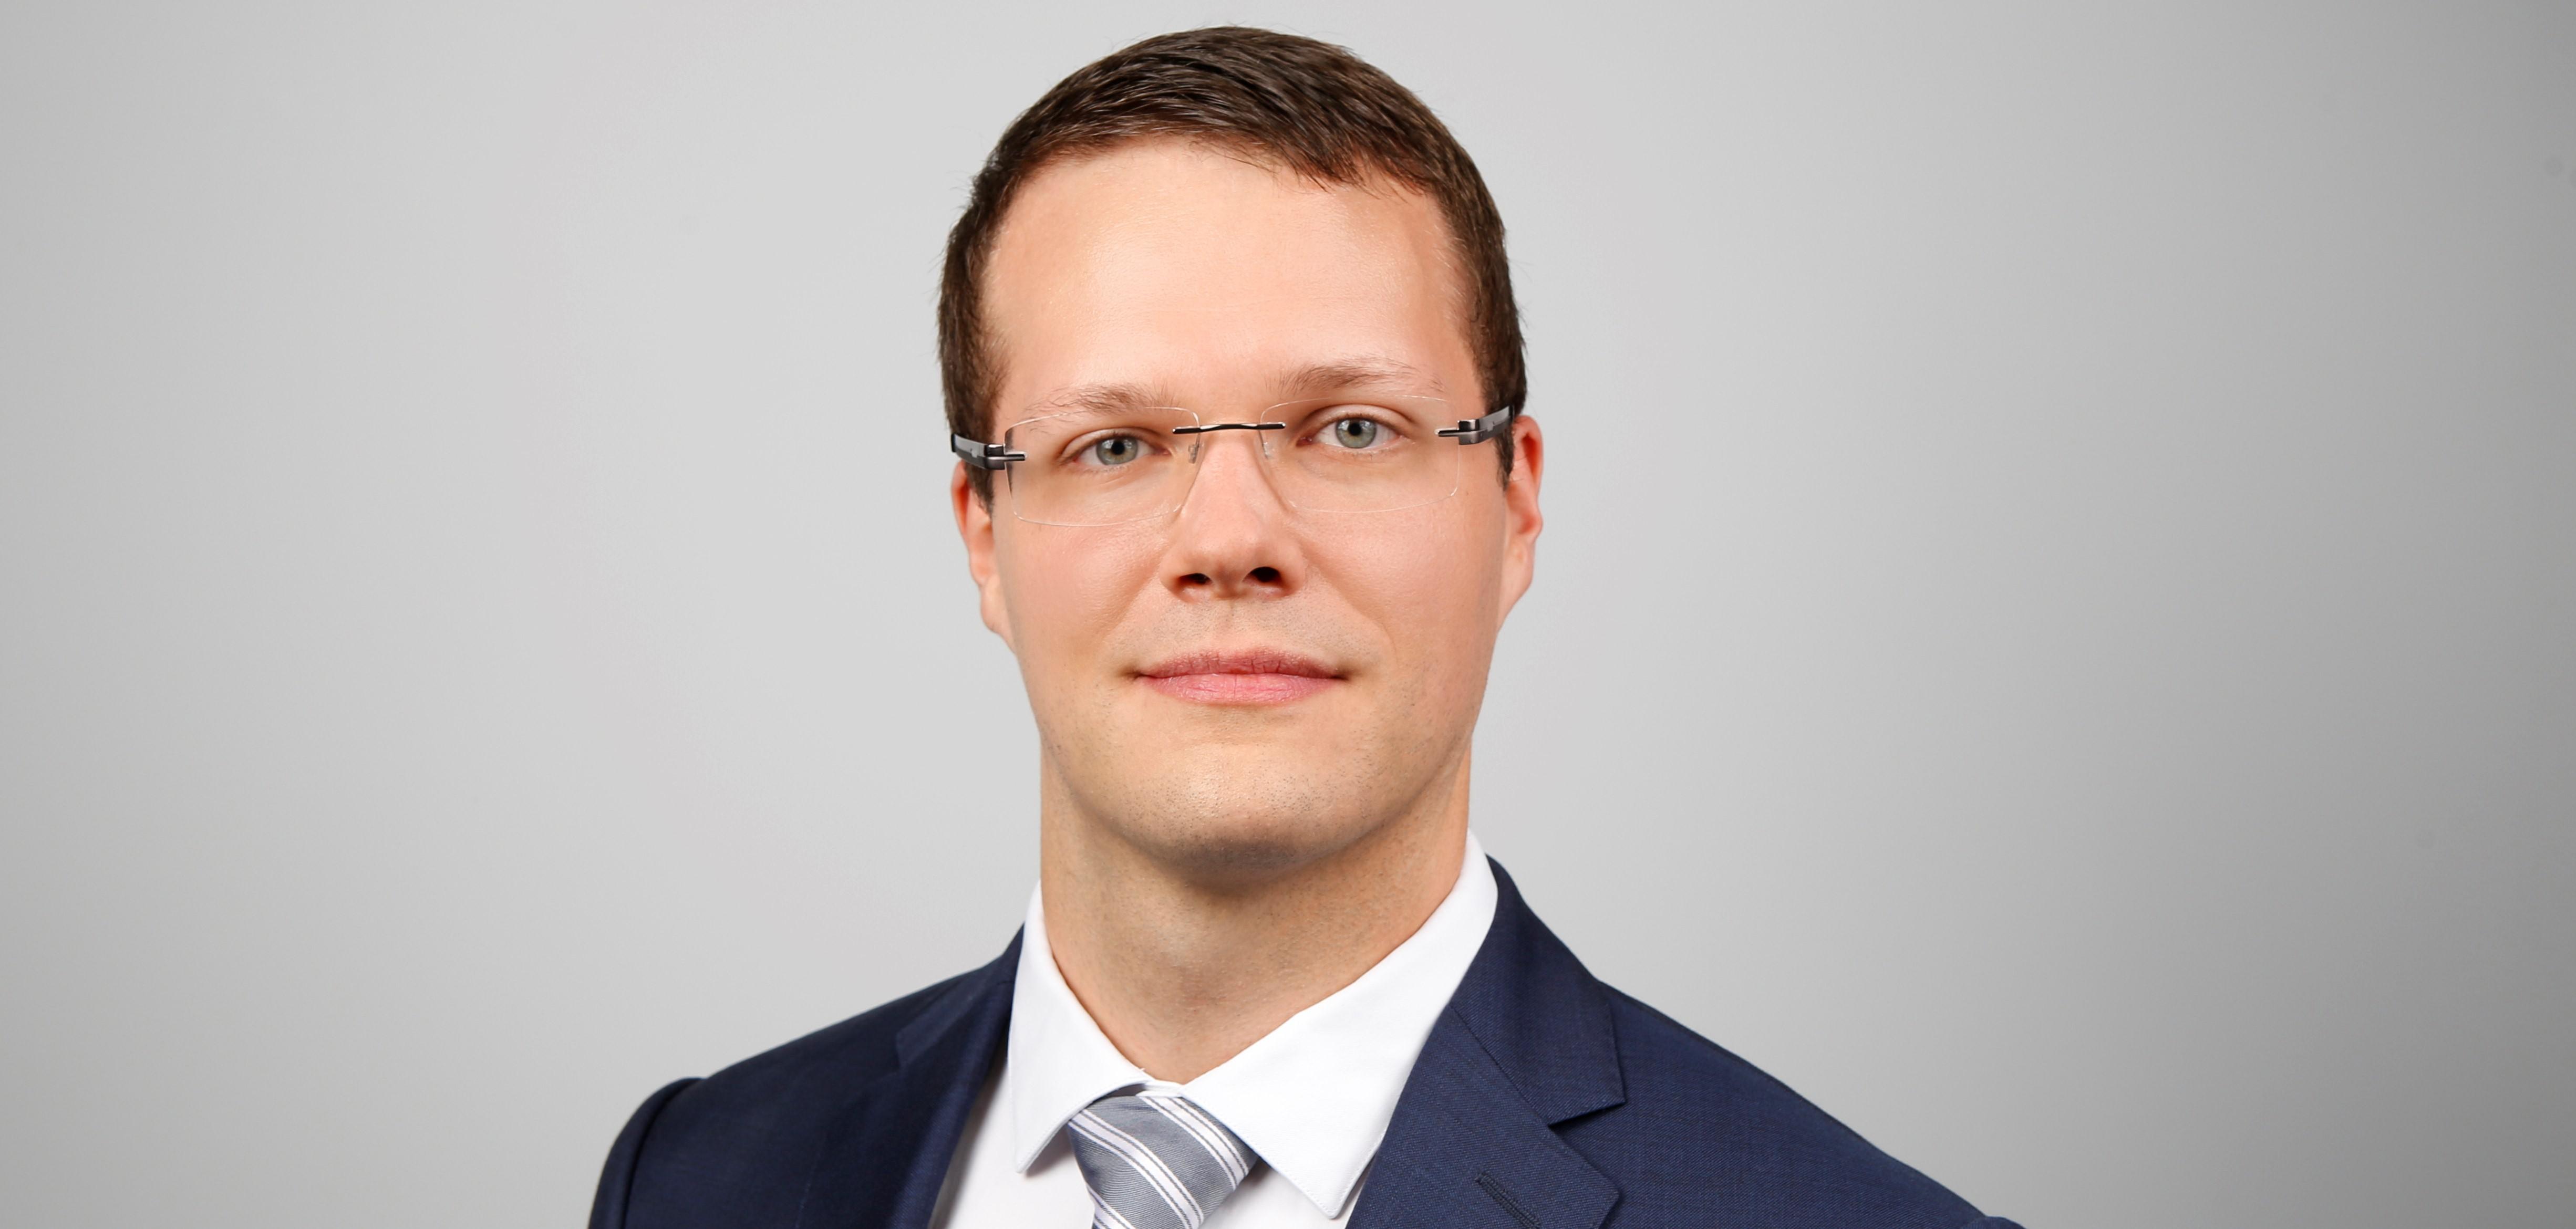 Peter Kolb - Rechtsanwalt, Am Landgericht 6 in Mönchengladbach